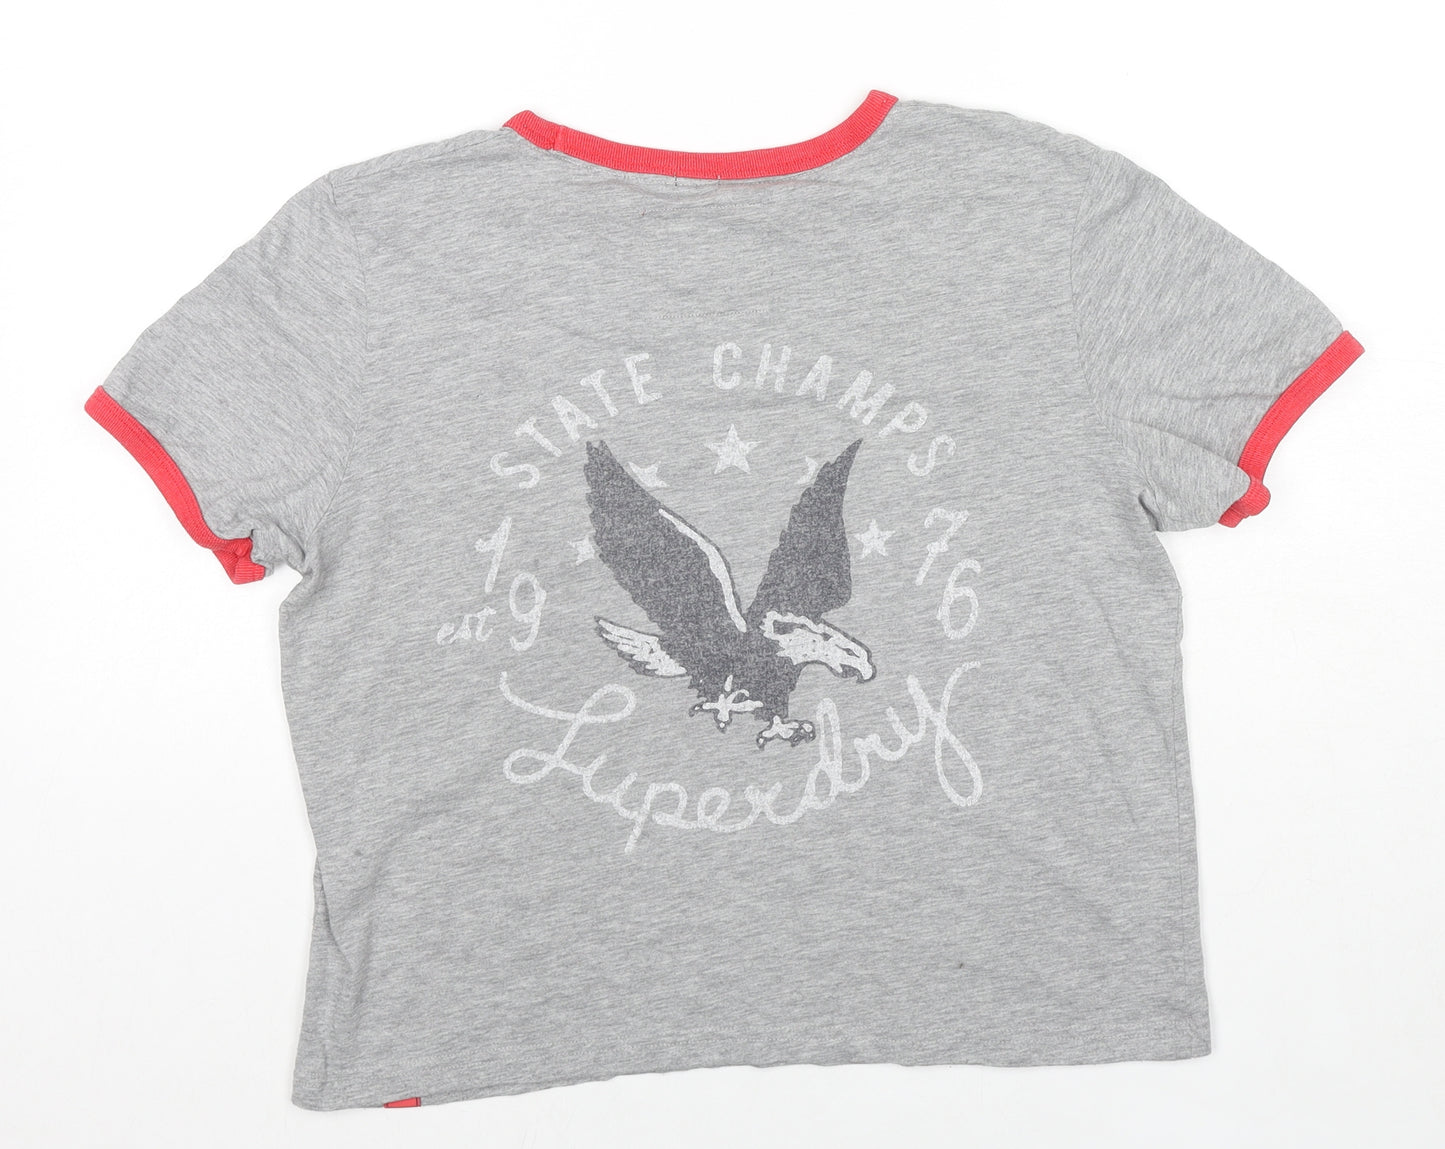 Superdry Womens Grey Cotton Basic T-Shirt Size 12 Round Neck - Eagle